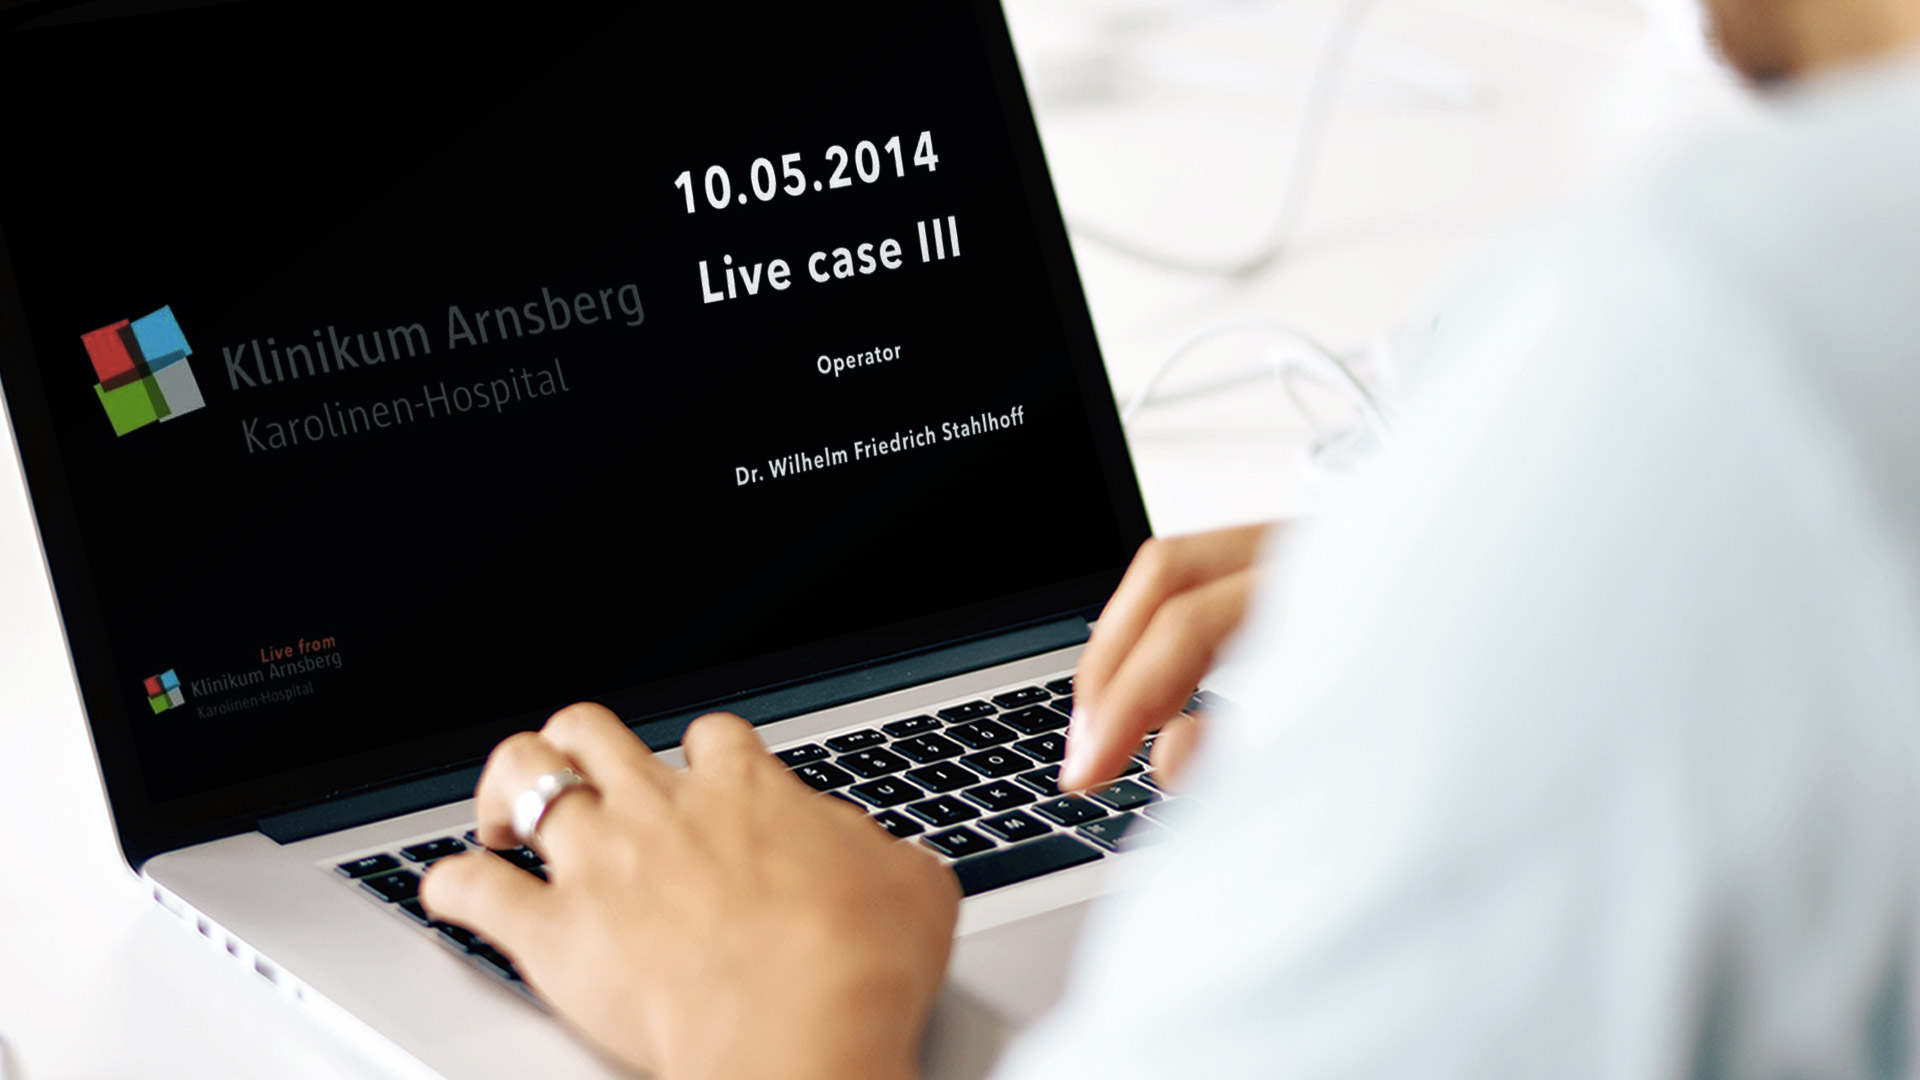 Klinikum Arnsberg congress 2014 - live case 1